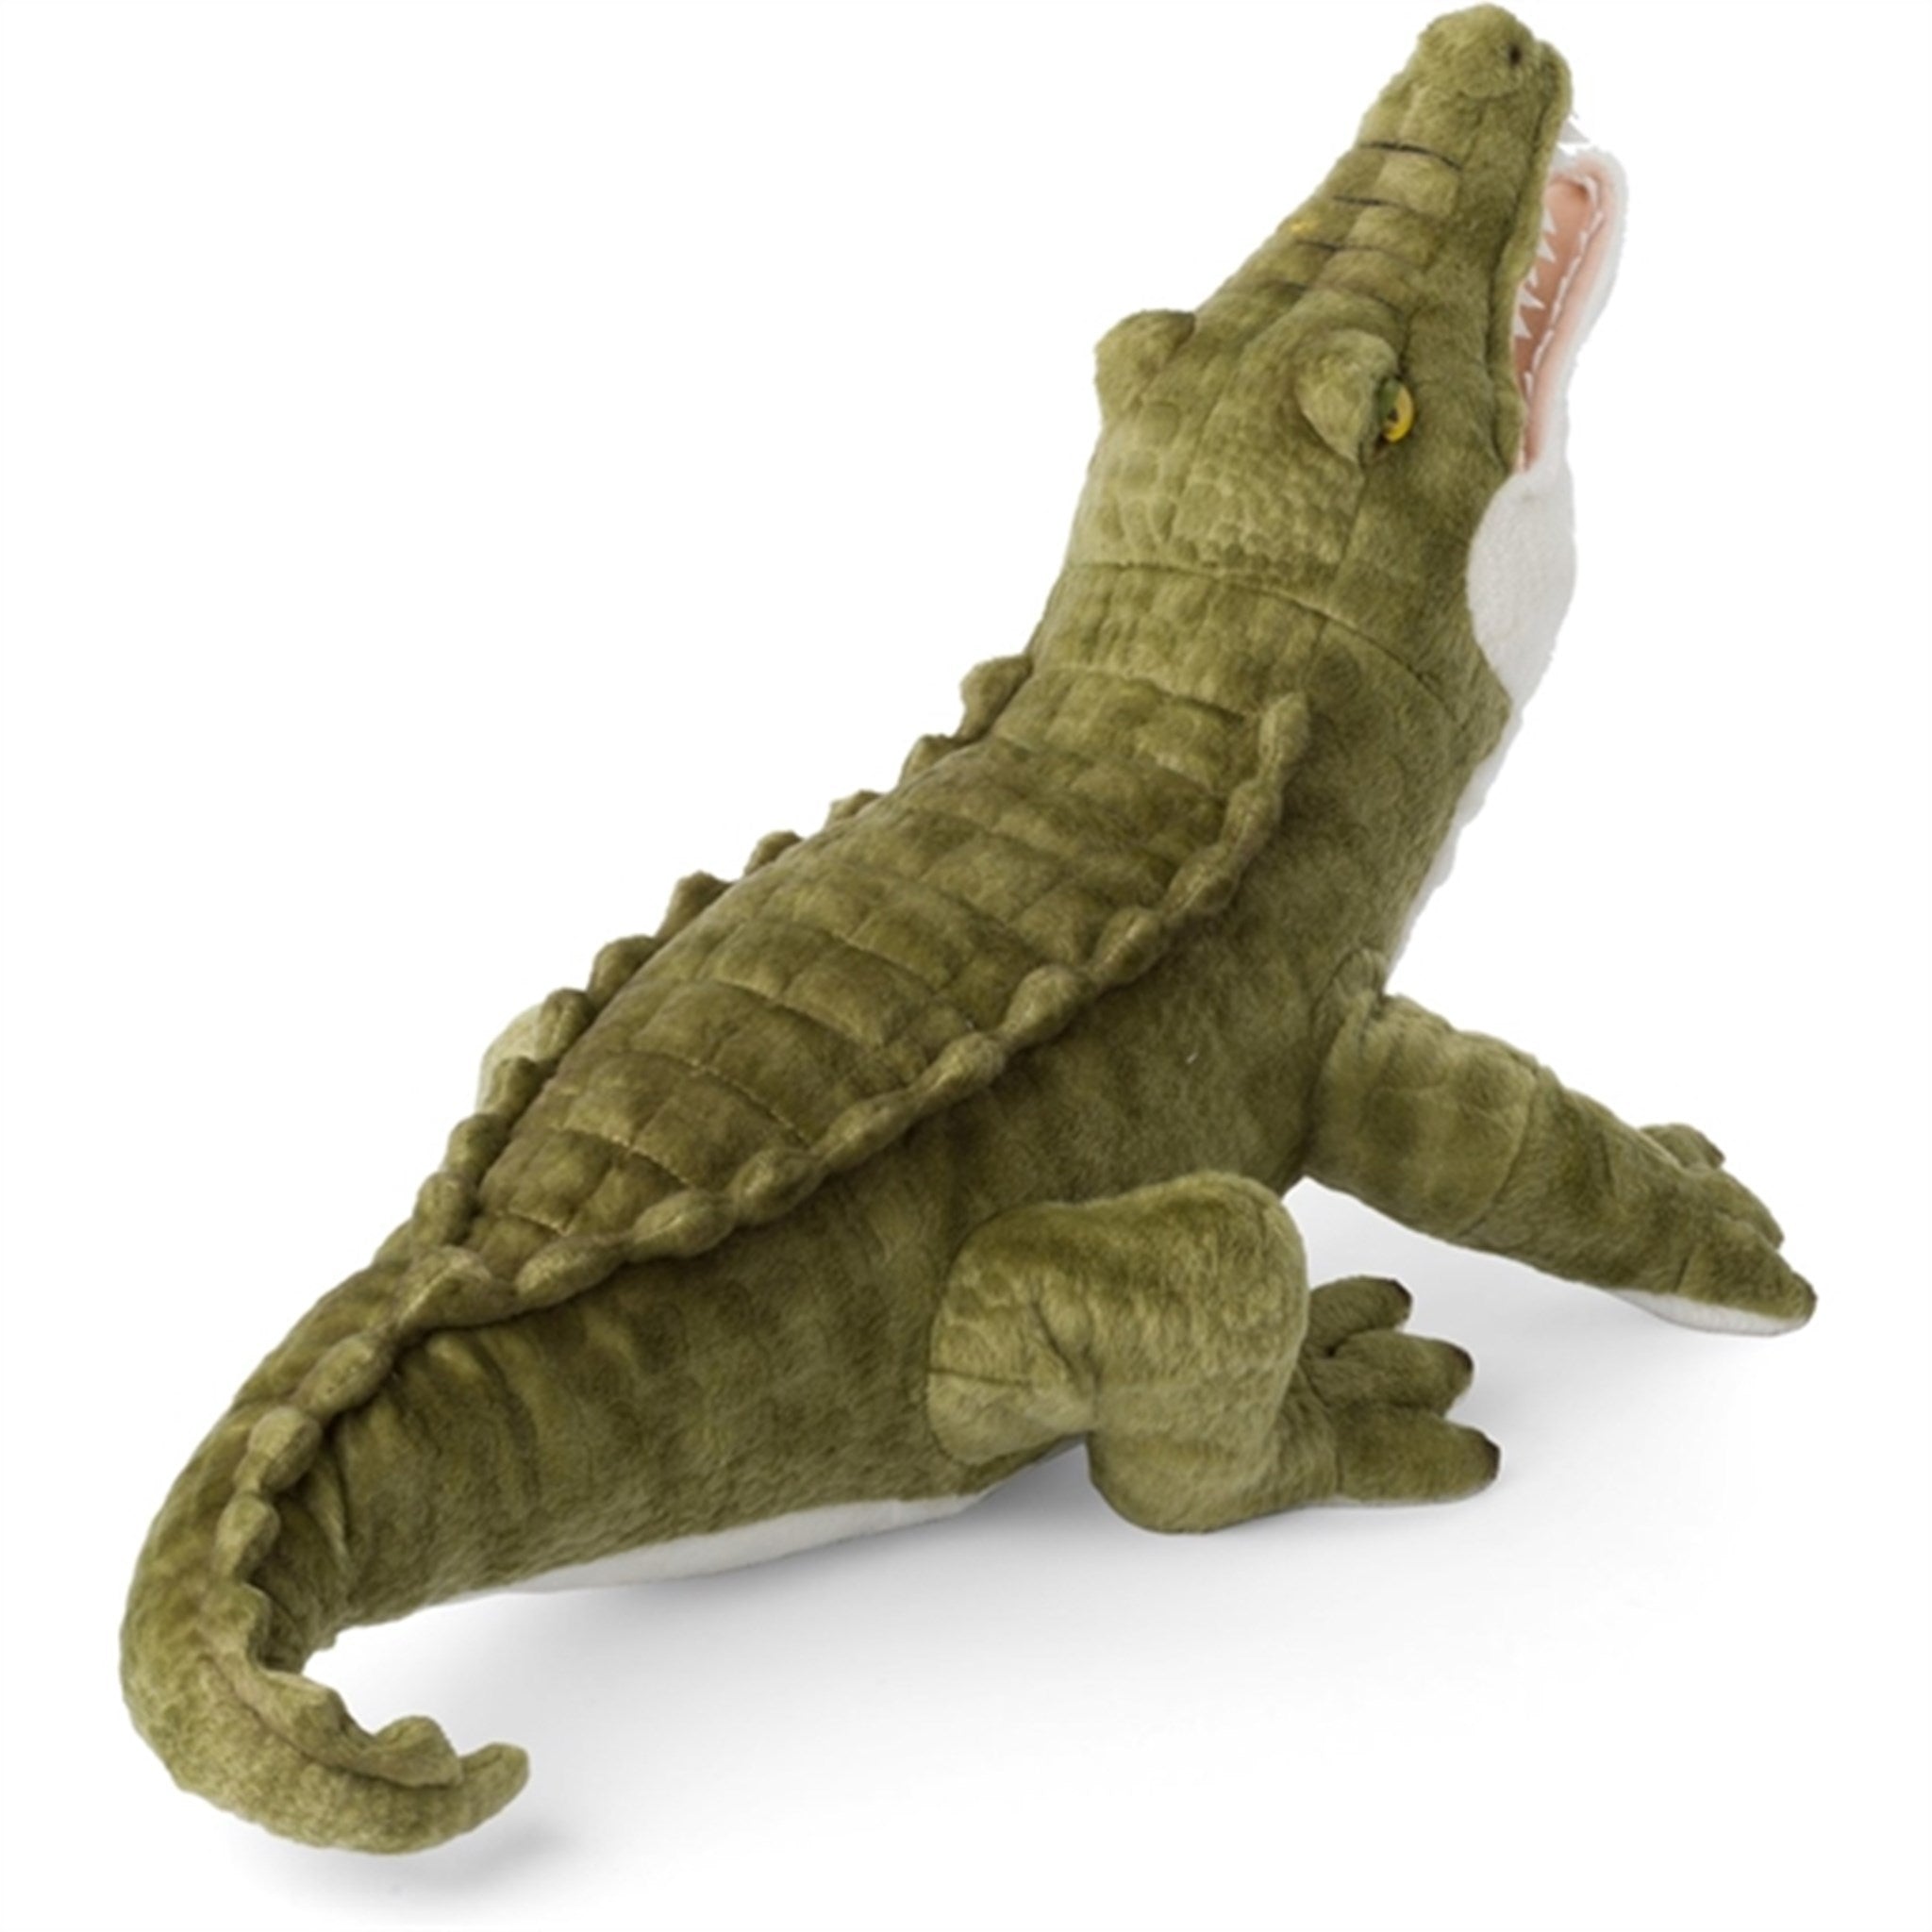 Bon Ton Toys WWF Plush Crocodile 58 cm 2